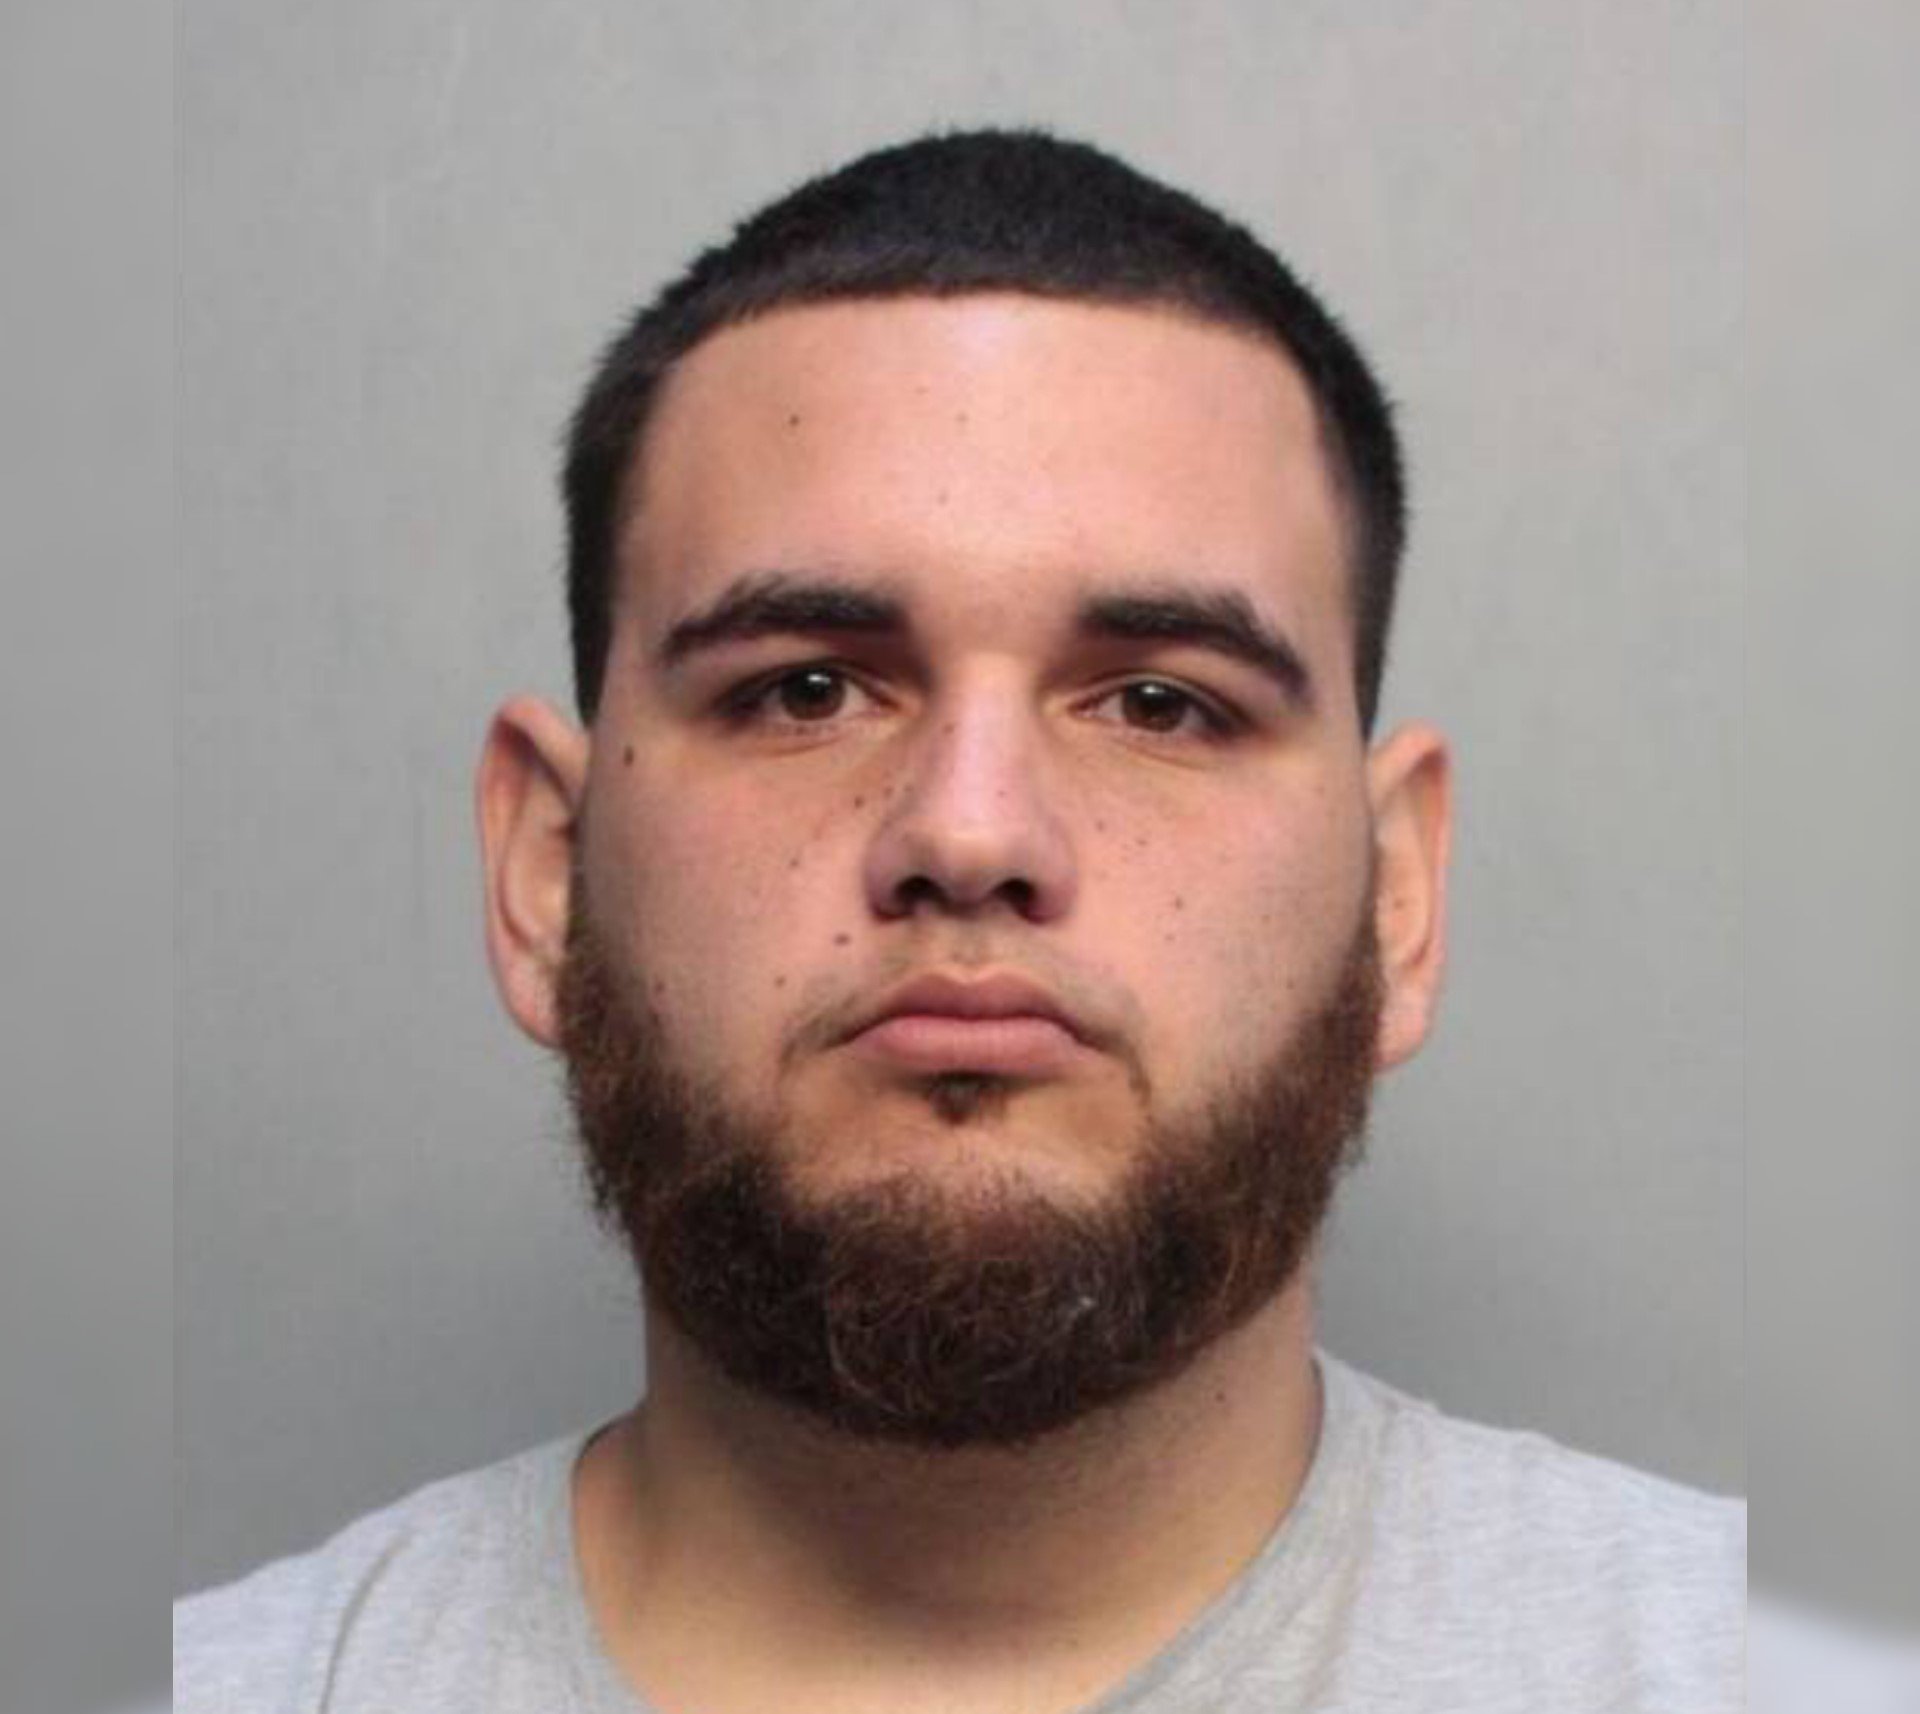 Cubano detenido en Miami